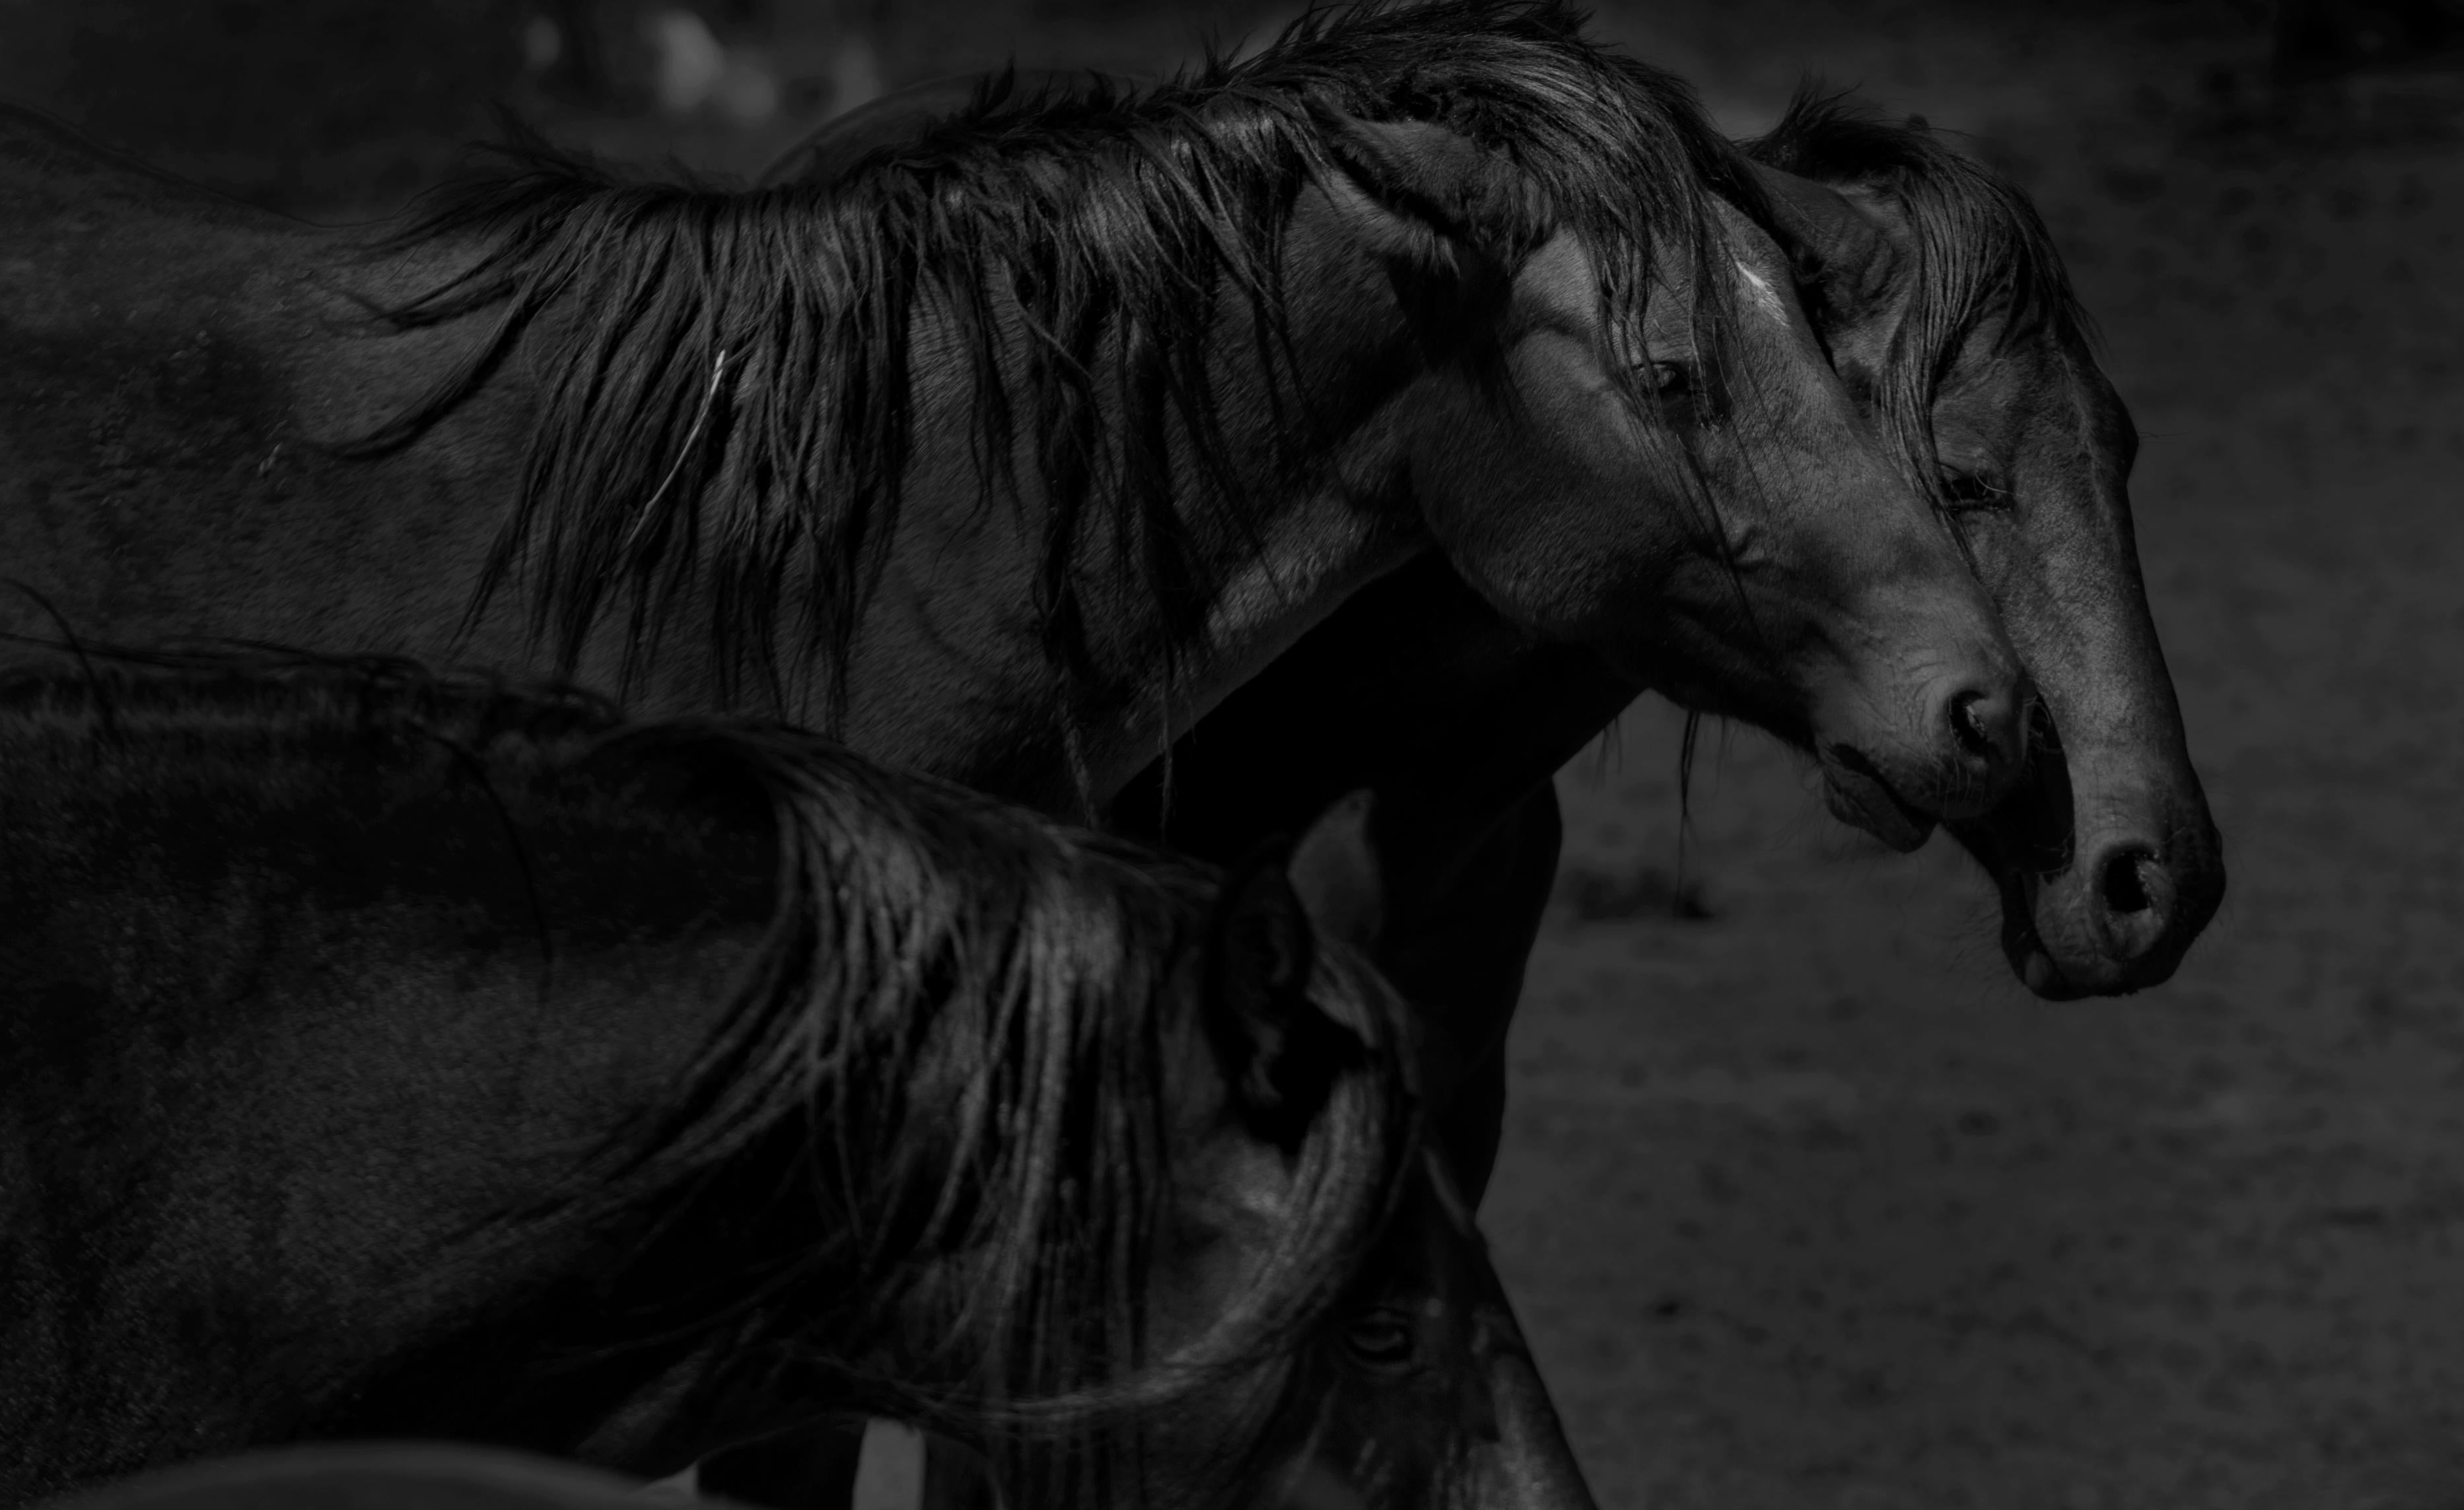 Shane Russeck Animal Print - Dark Horses "36x48" Black & White Photography Wild Horses, Mustangs, Photograph 